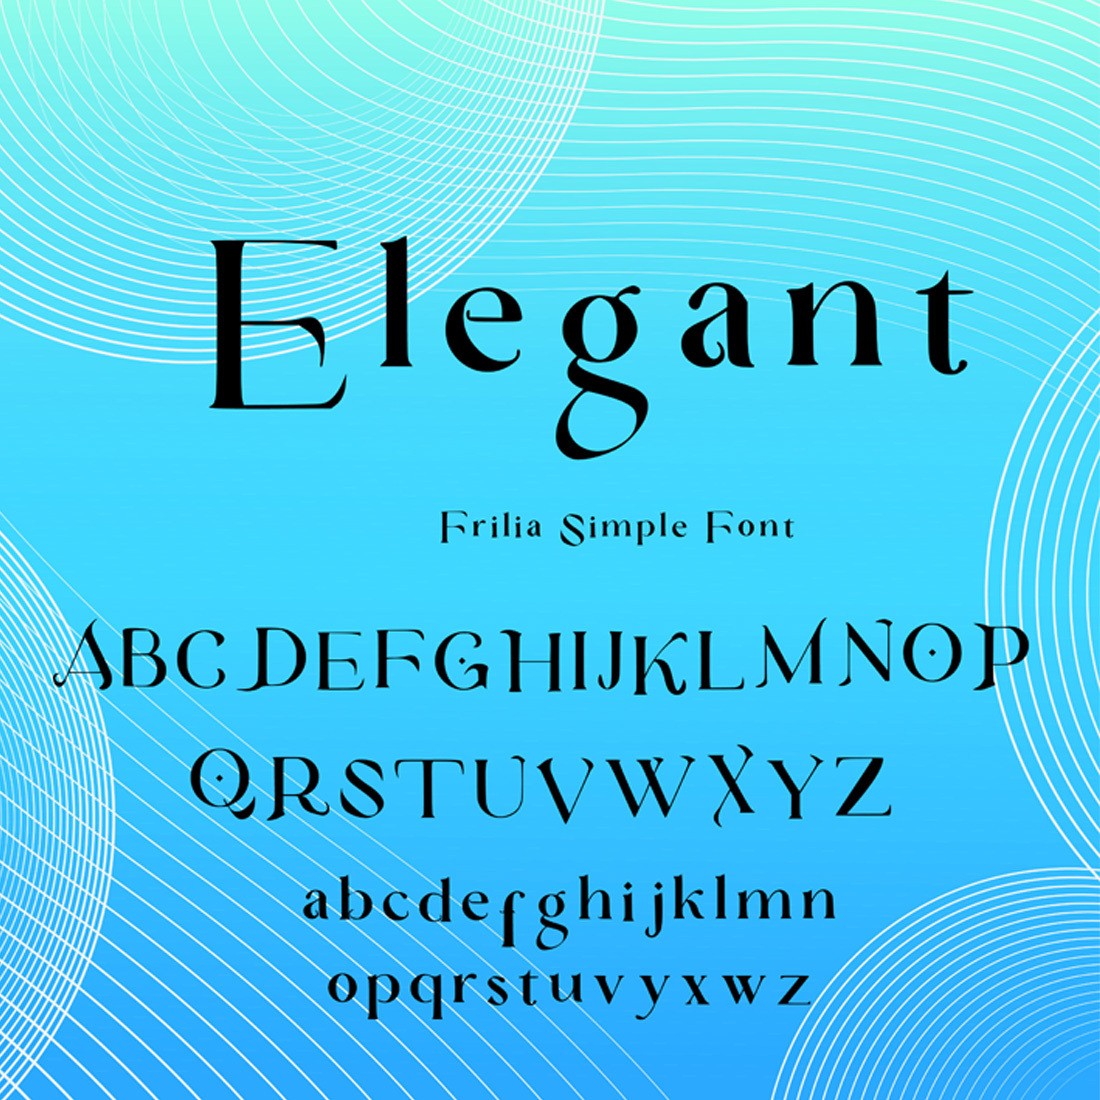 Frilia Simple Font - Elegant cover image.